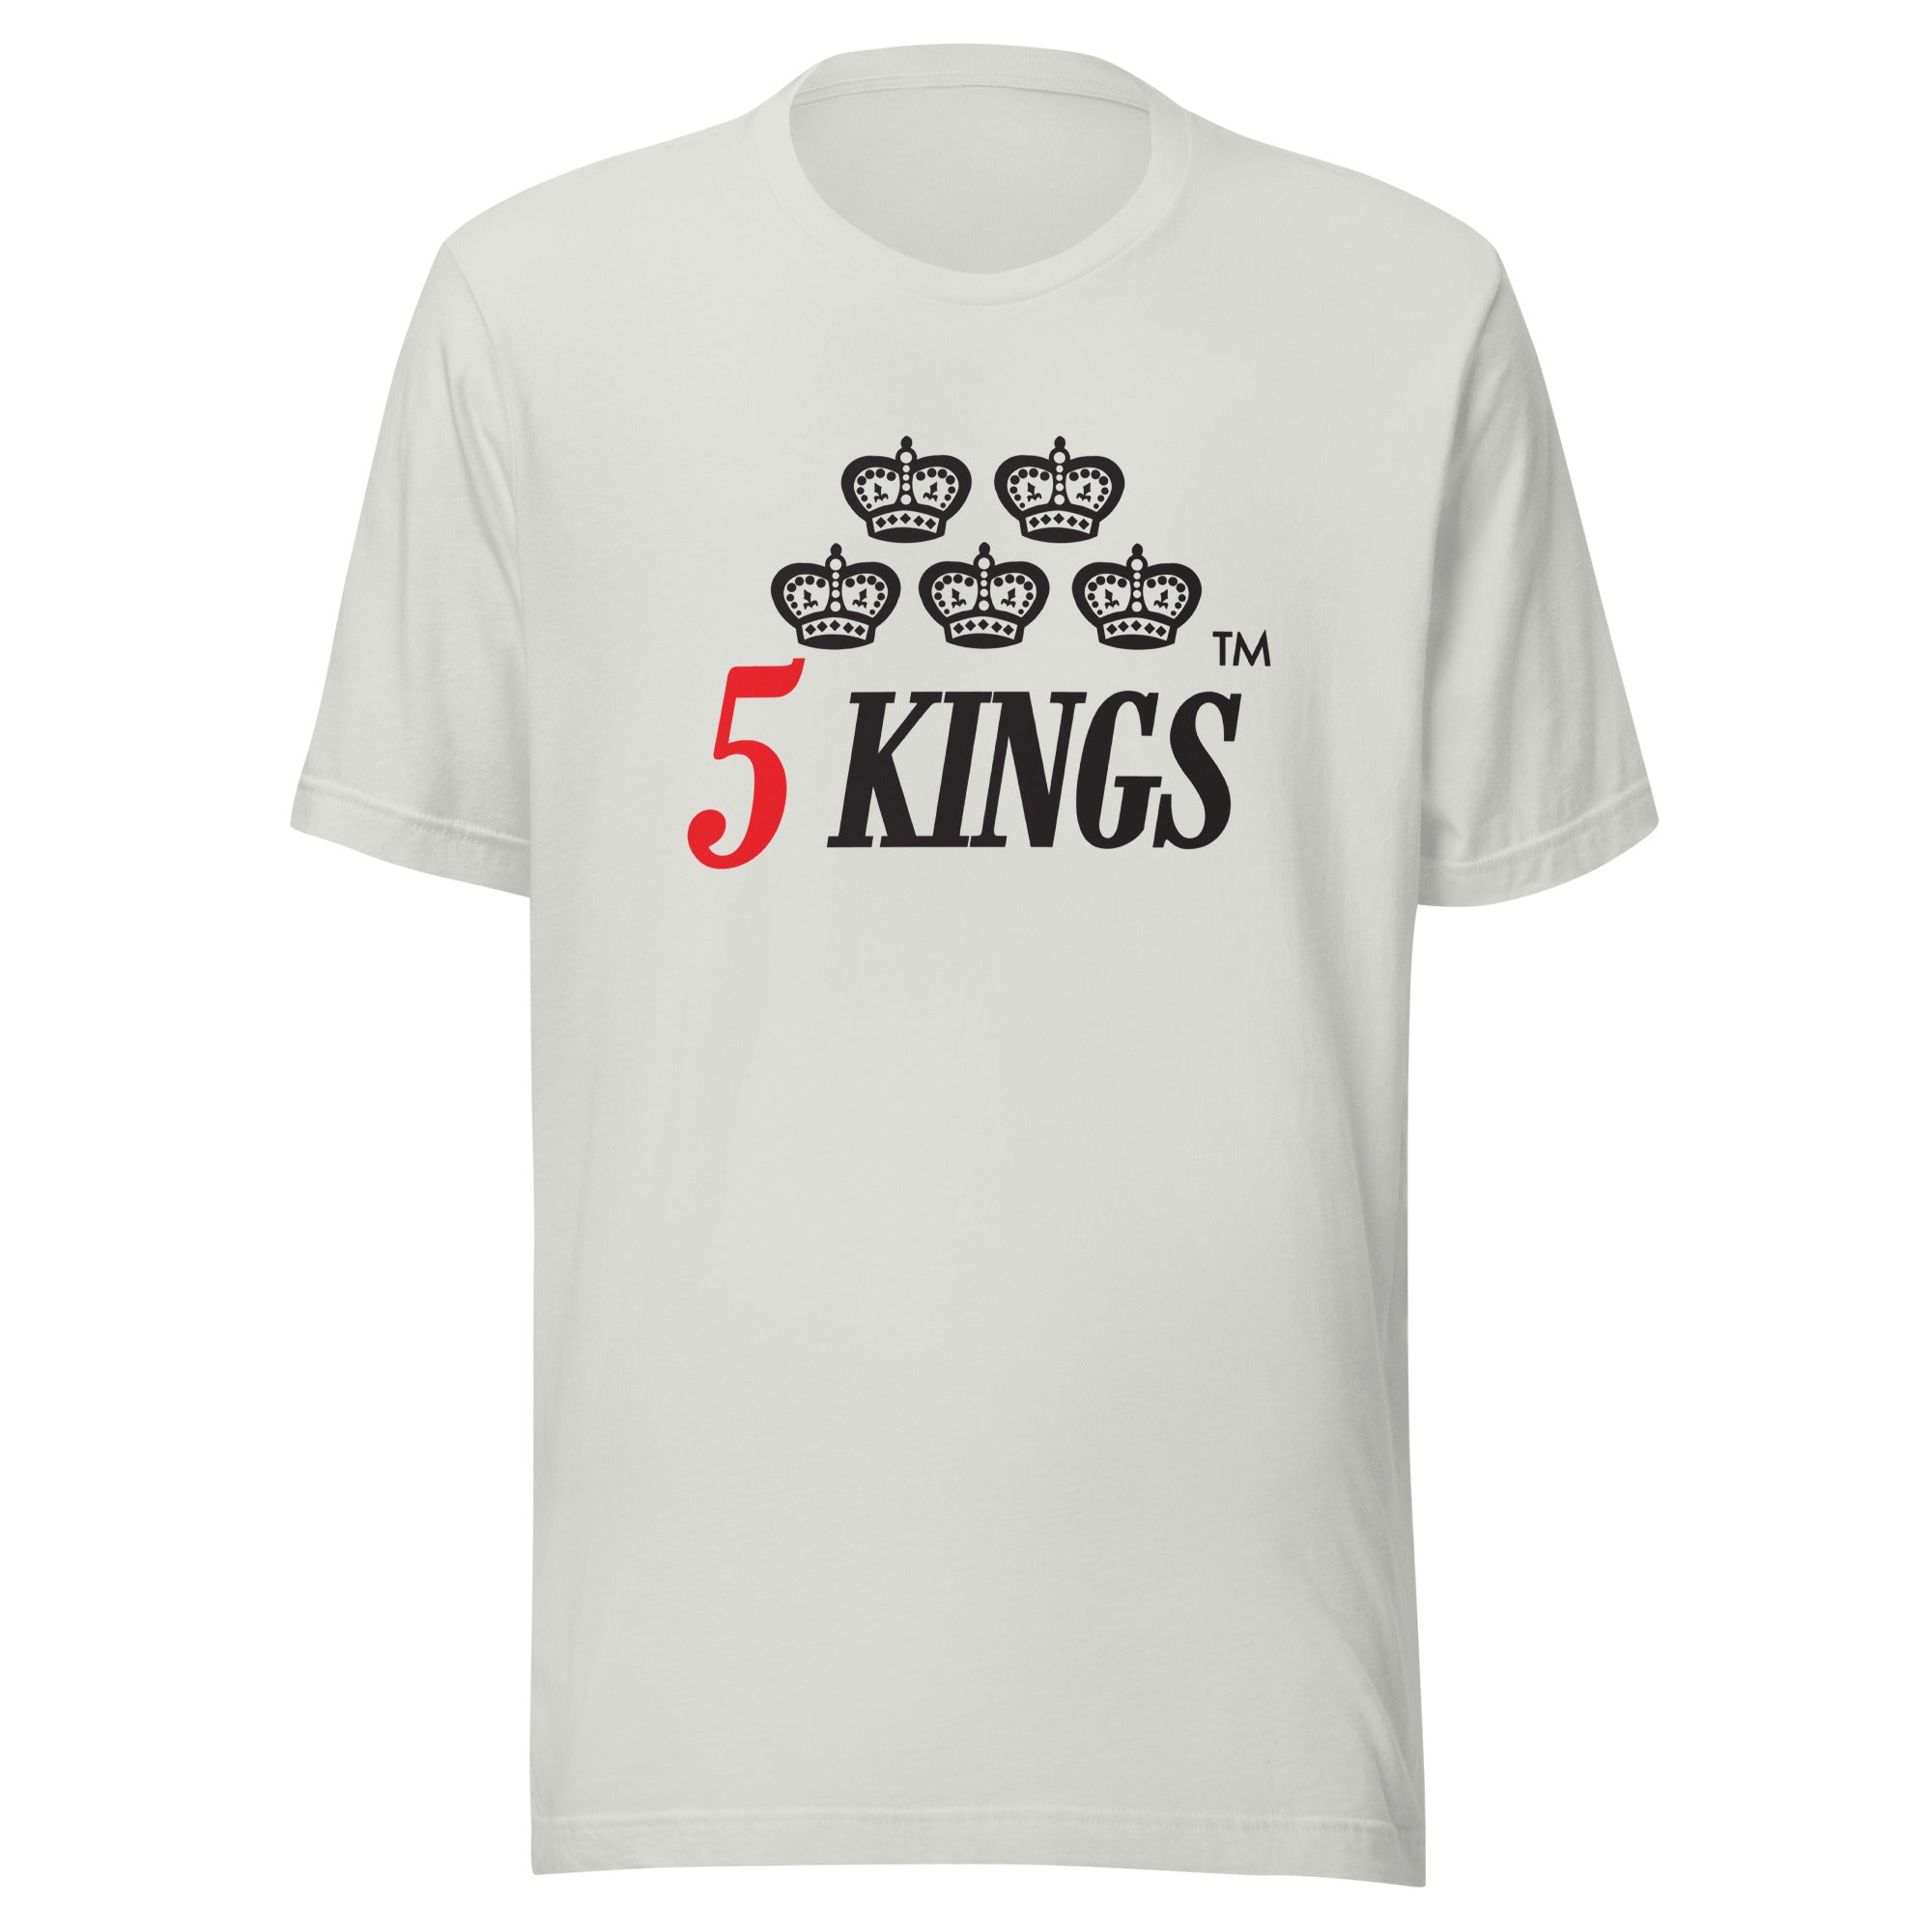 5 KINGS | T-shirt | Bella + Canvas